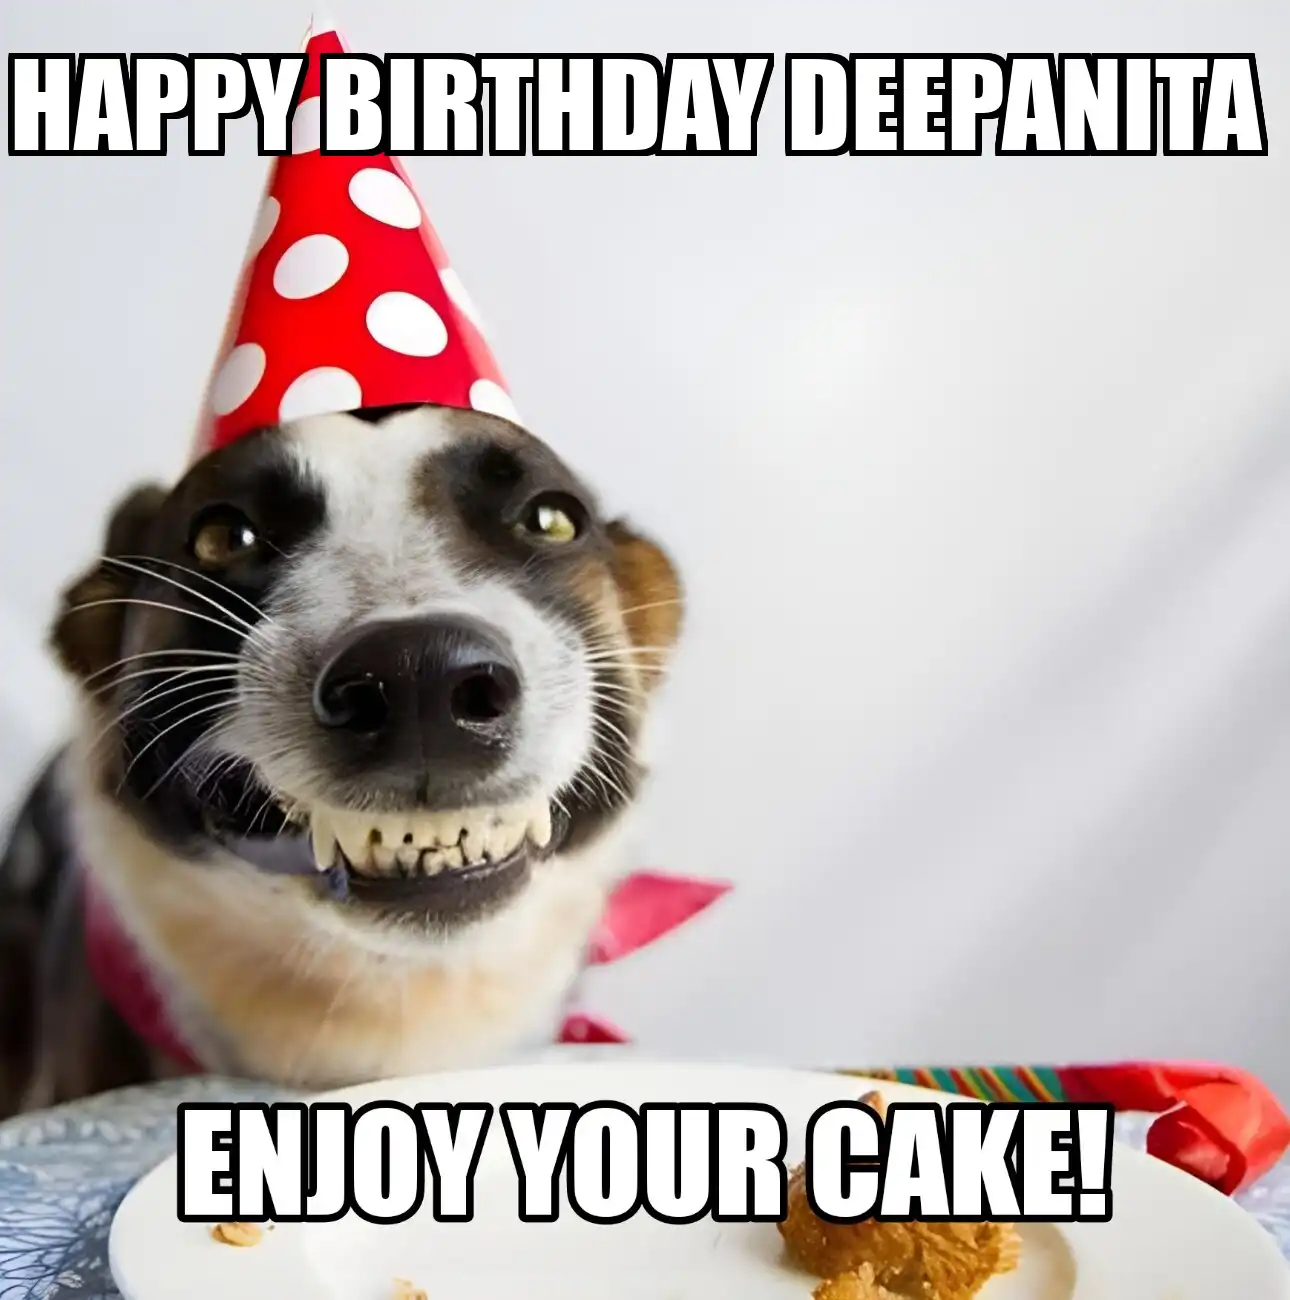 Happy Birthday Deepanita Enjoy Your Cake Dog Meme